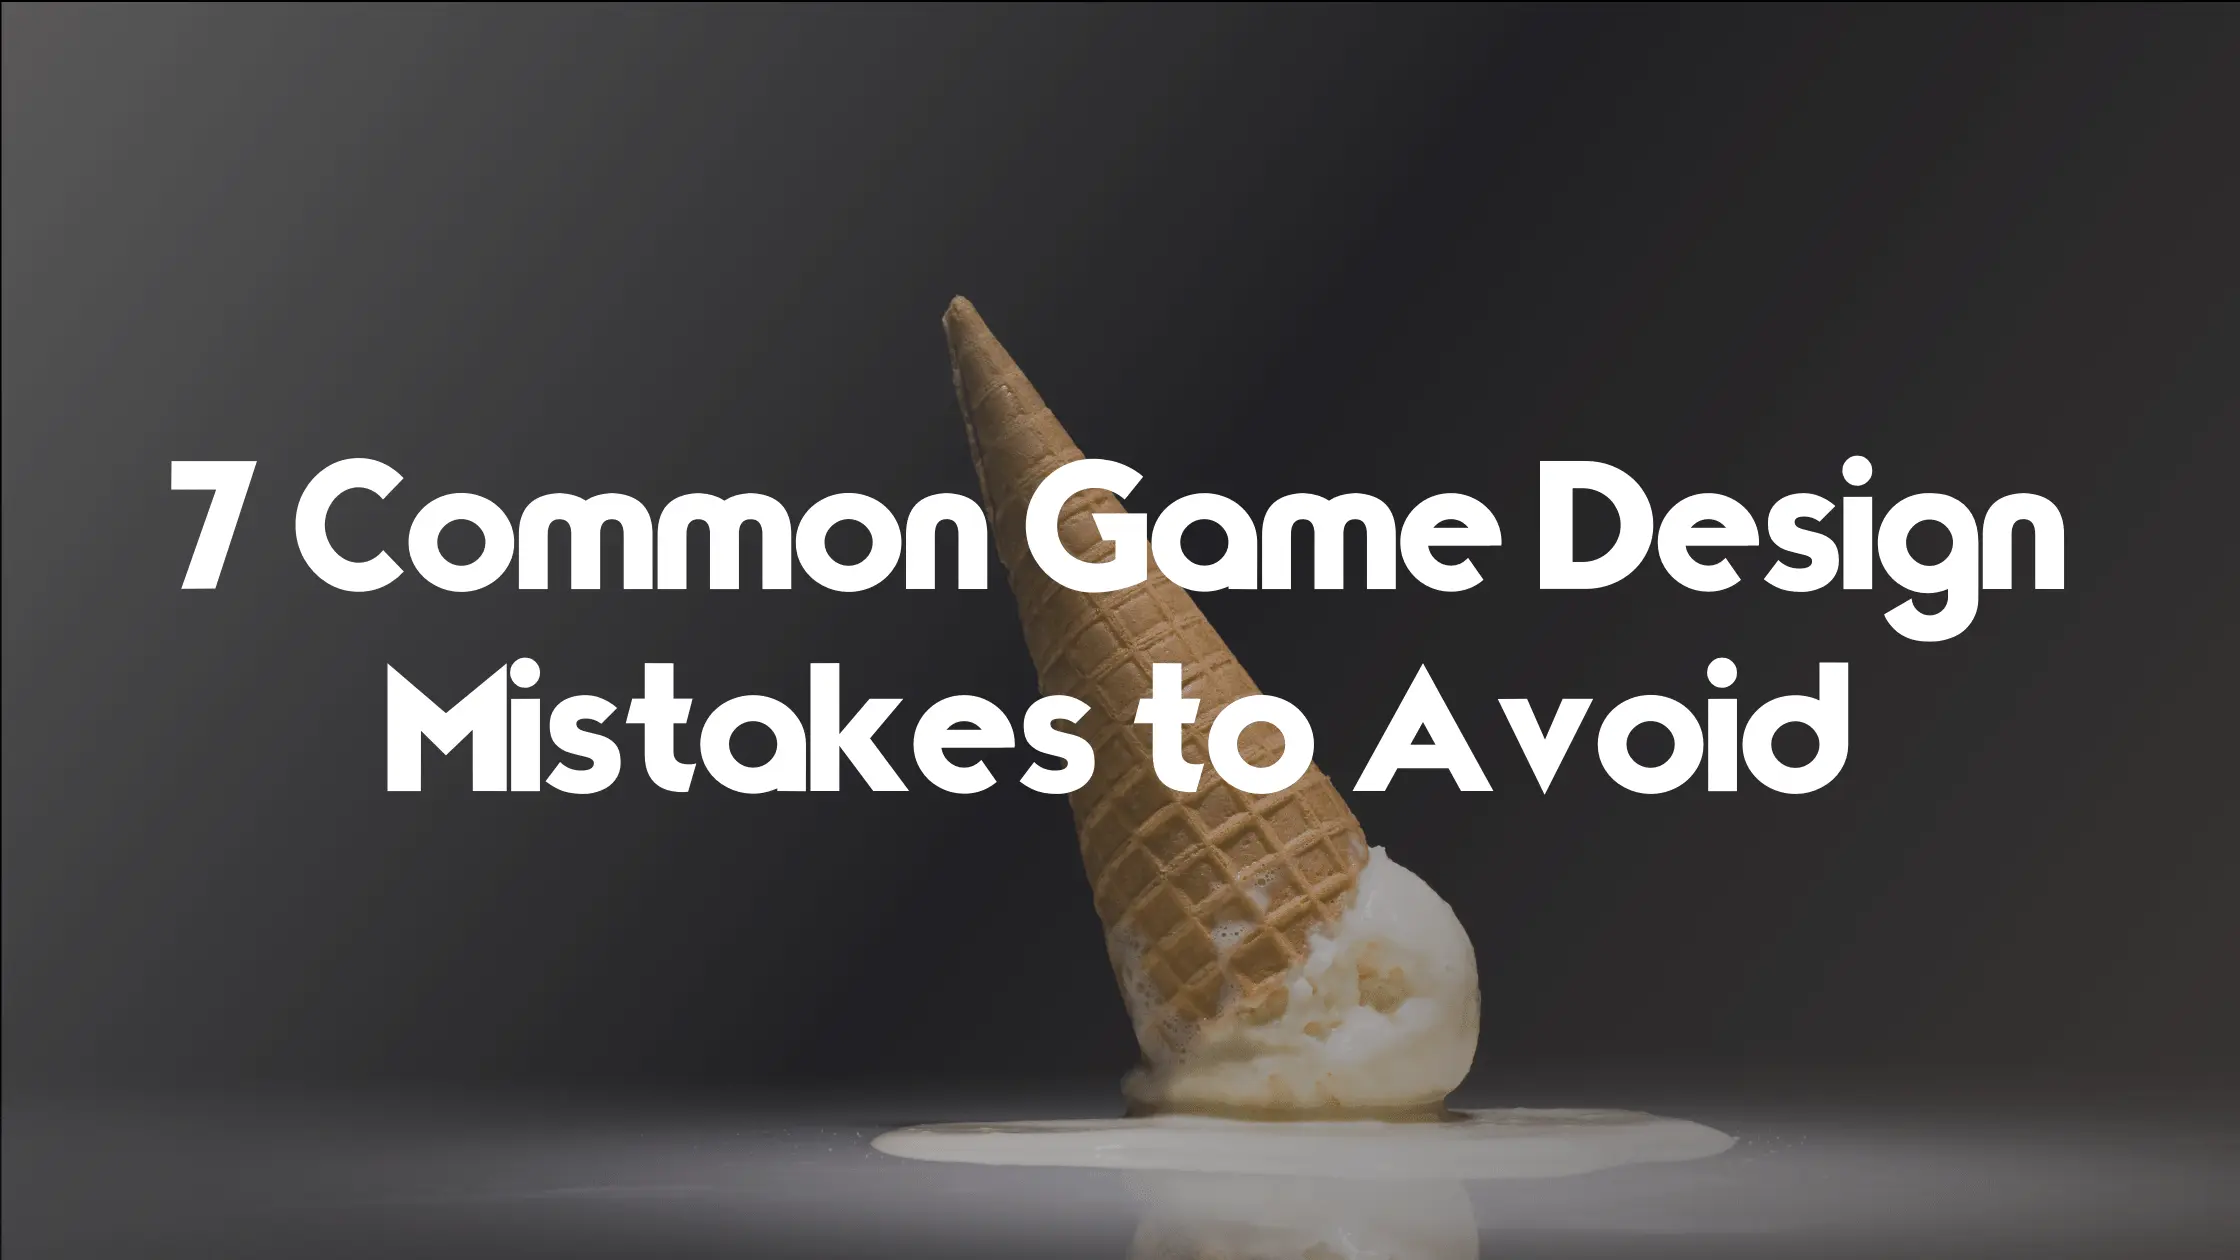 Common Game Design Mistakes to Avoid